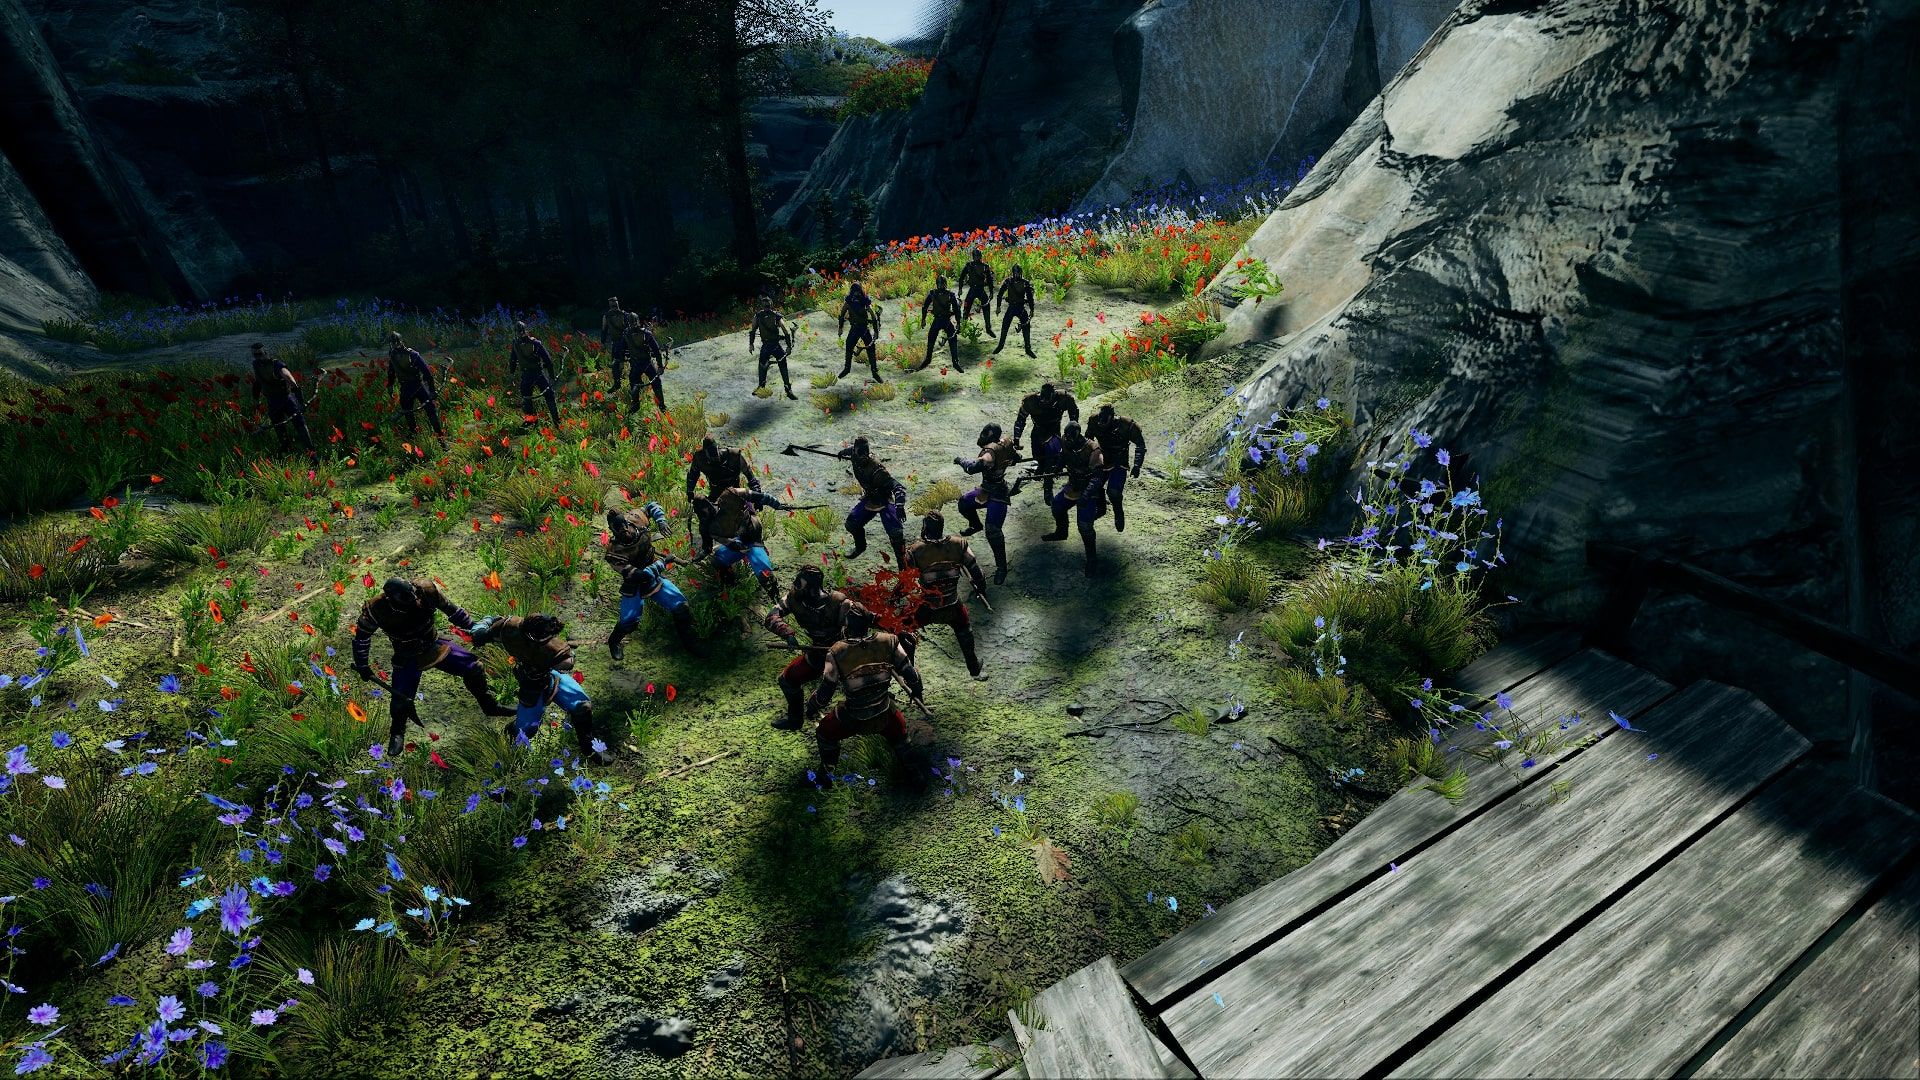 Frozenheim Axemen and Archers fighting Jarl Erlands troops near a bridge